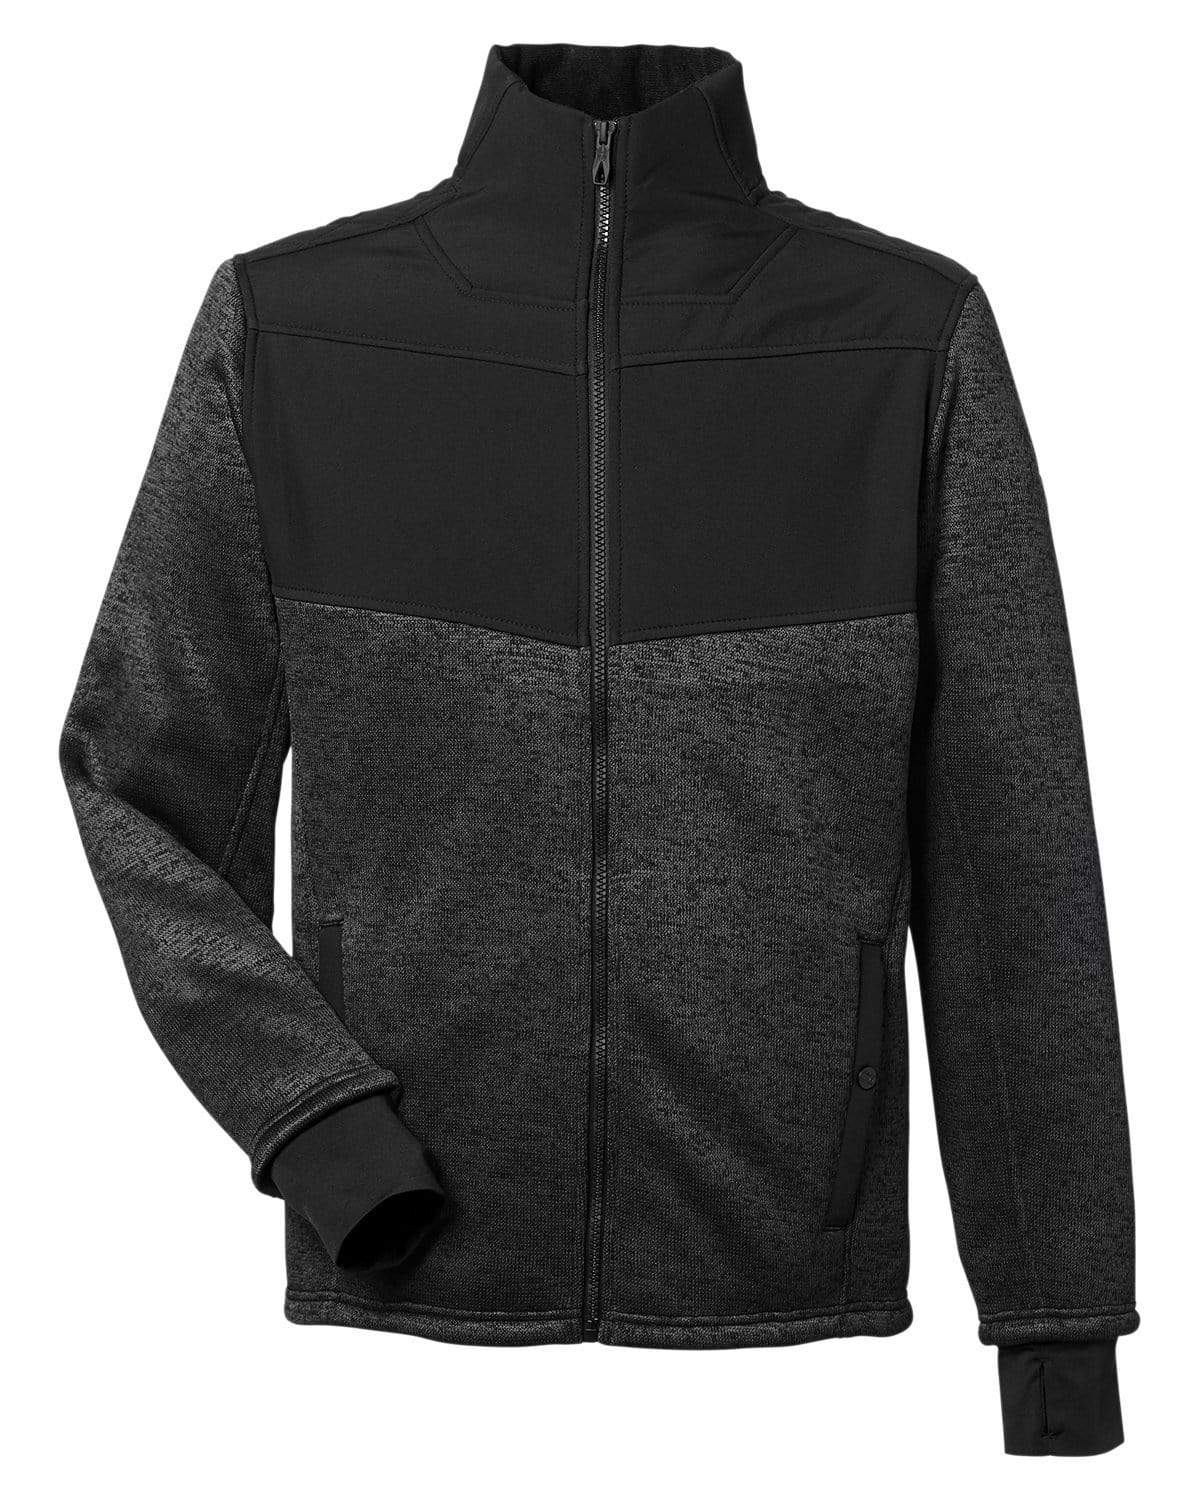 Spyder Fleece S / Black Powder/Black Spyder - Men's Passage Sweater Jacket